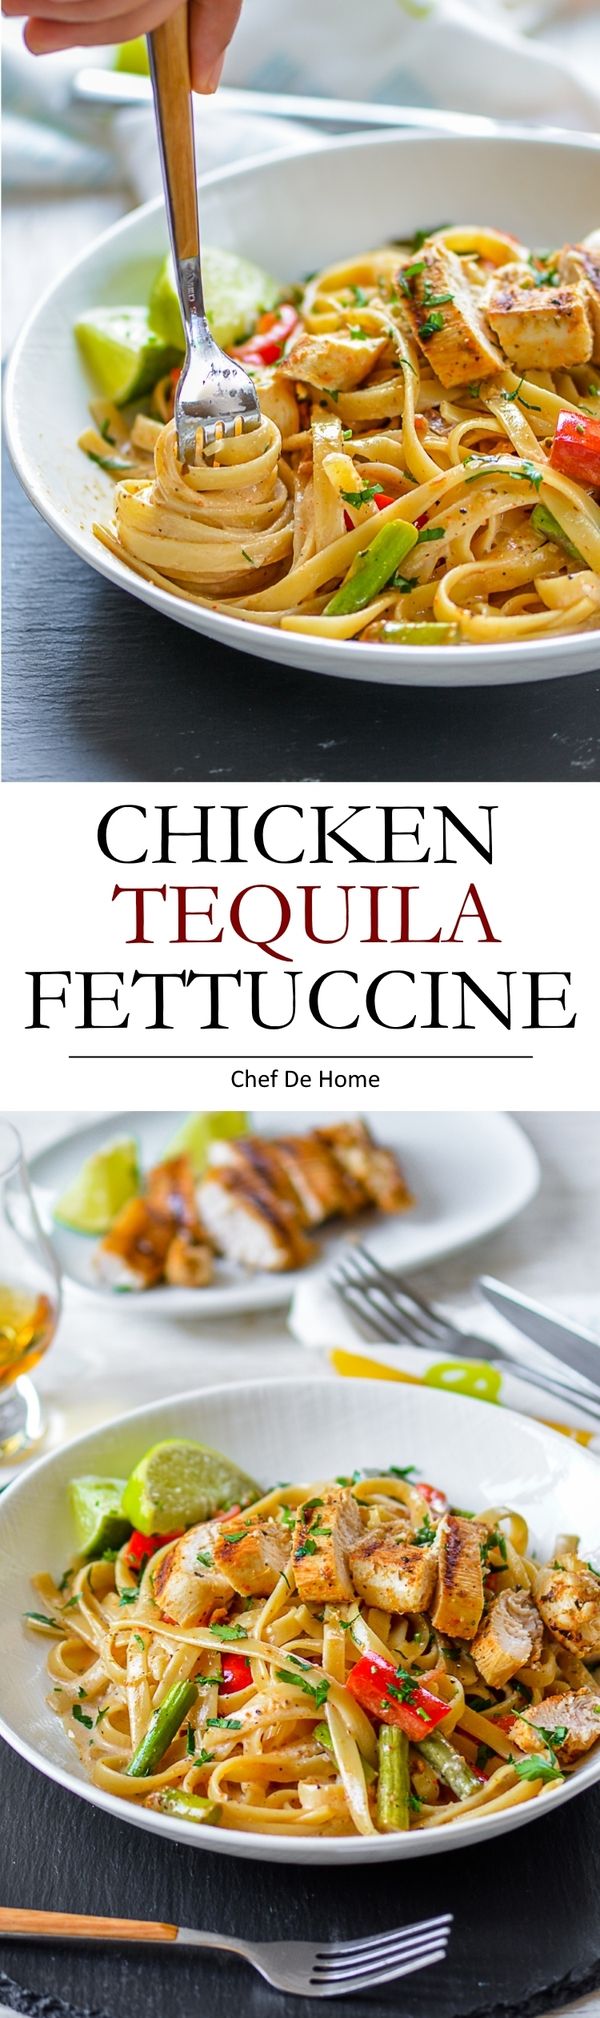 Chicken Tequila Fettuccine